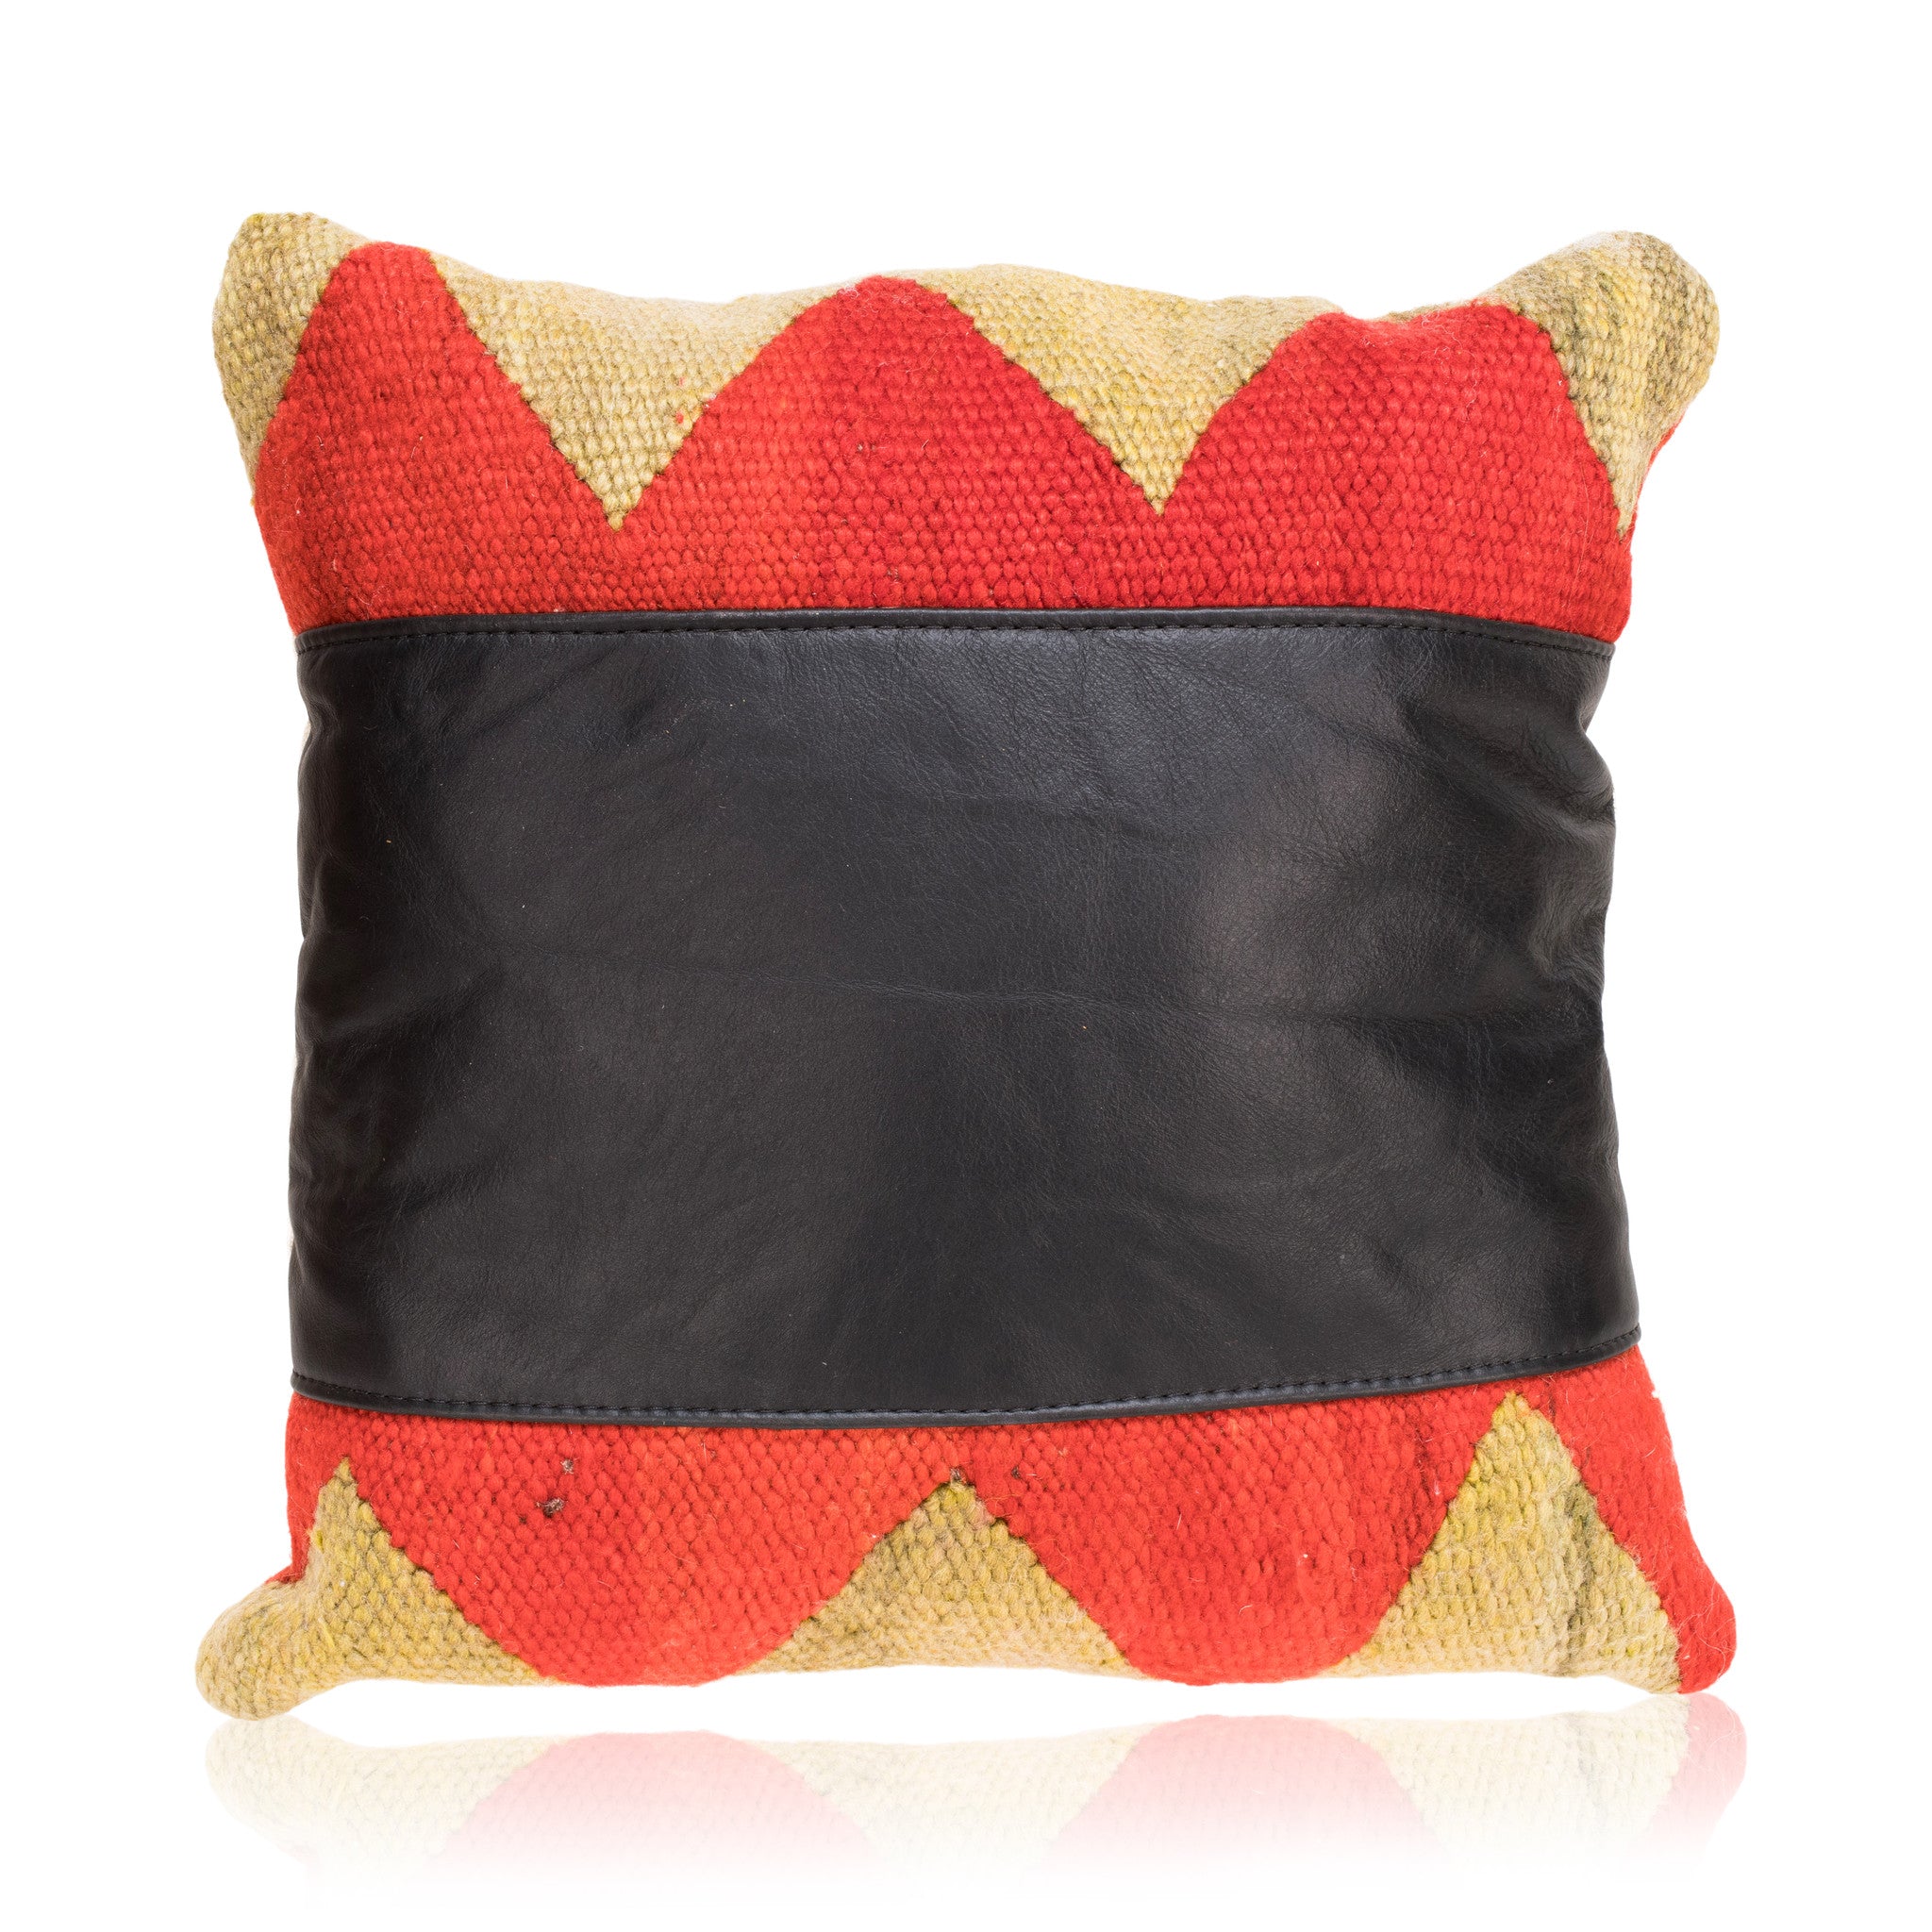 Navajo Transitional Pillow, Furnishings, Decor, Pillow